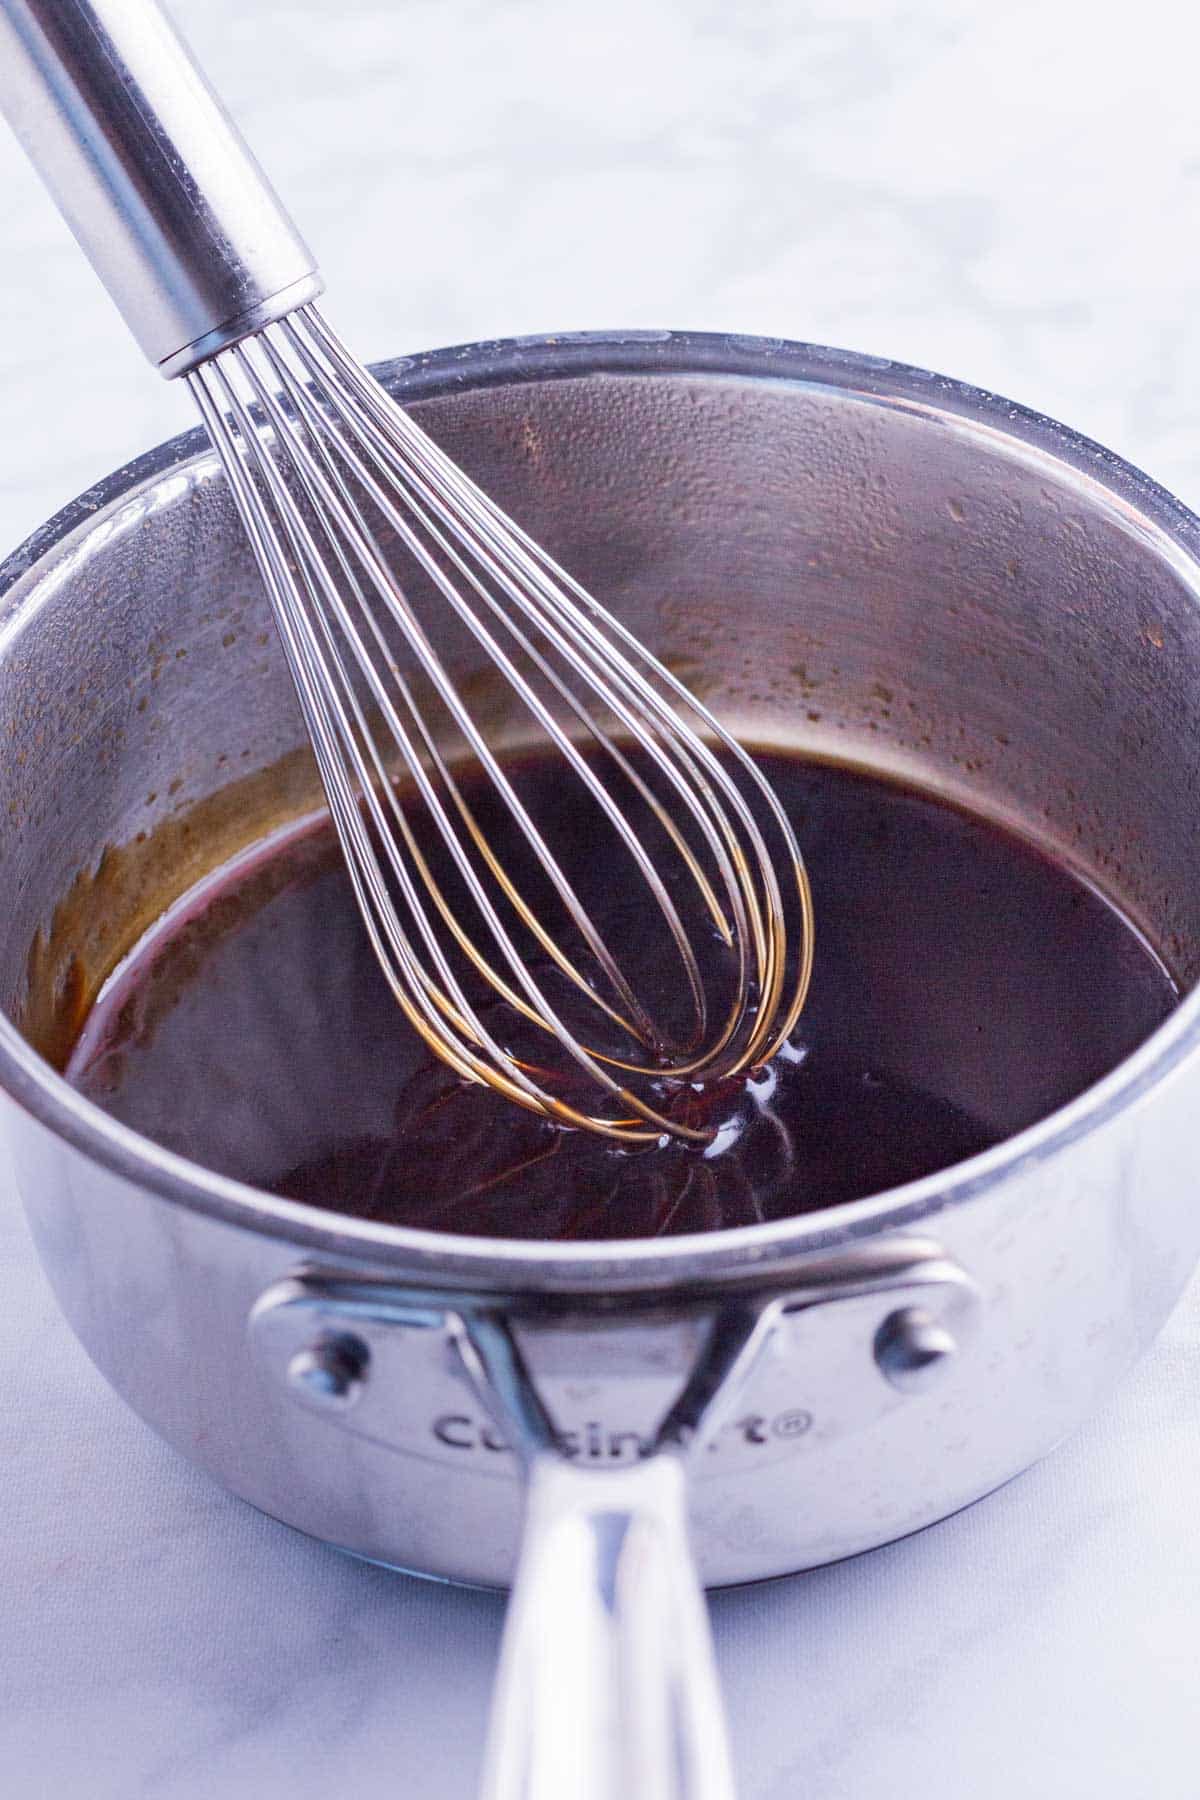 The Thai sauce is made in a saucepan.